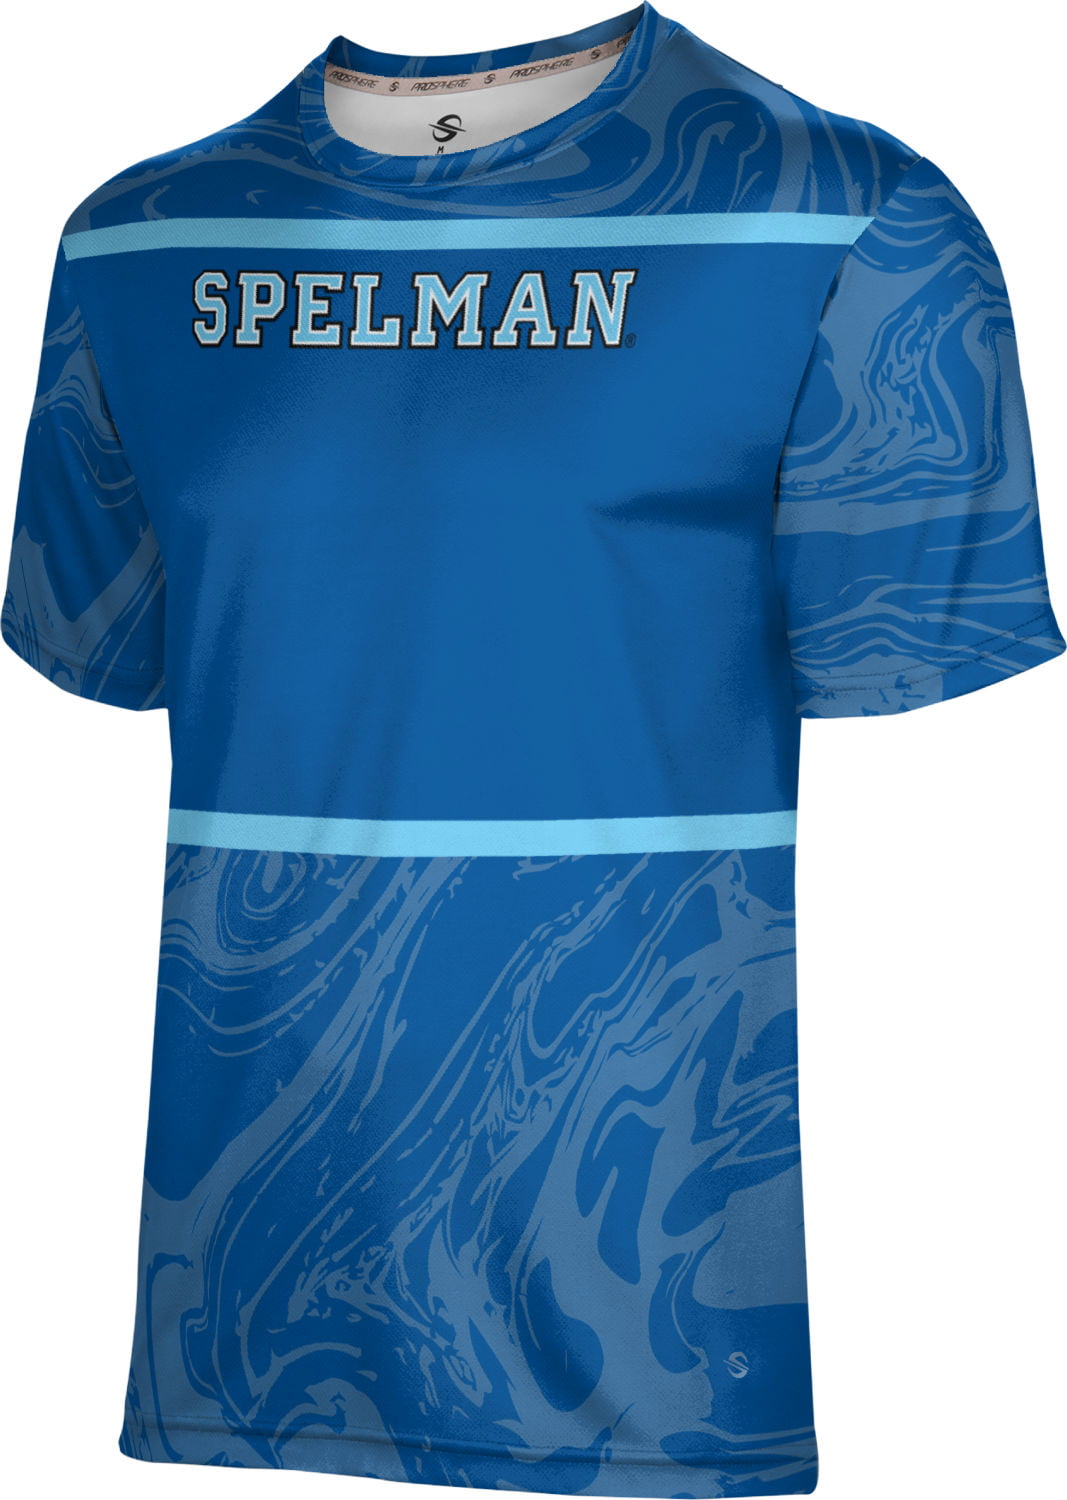 ProSphere Spelman College Mens Performance T-Shirt Ripple